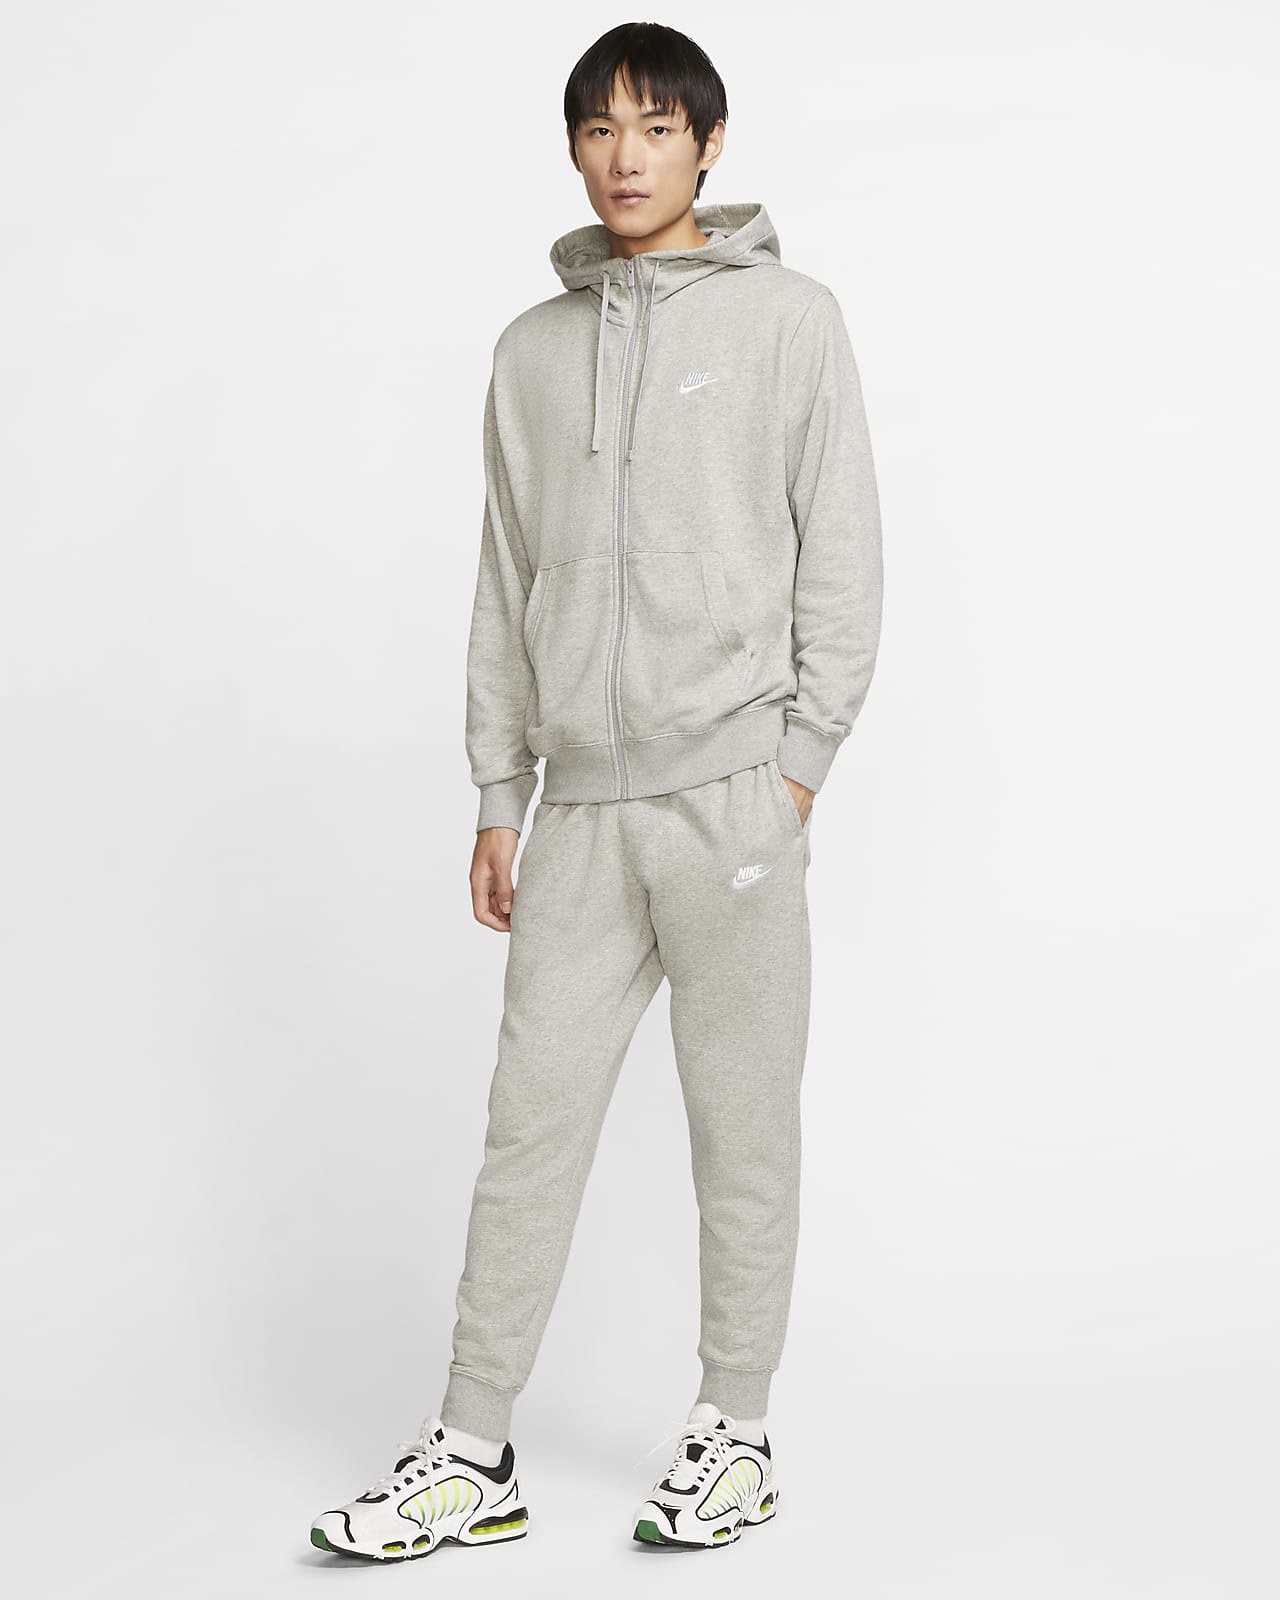 grey nike sweatpants and hoodie